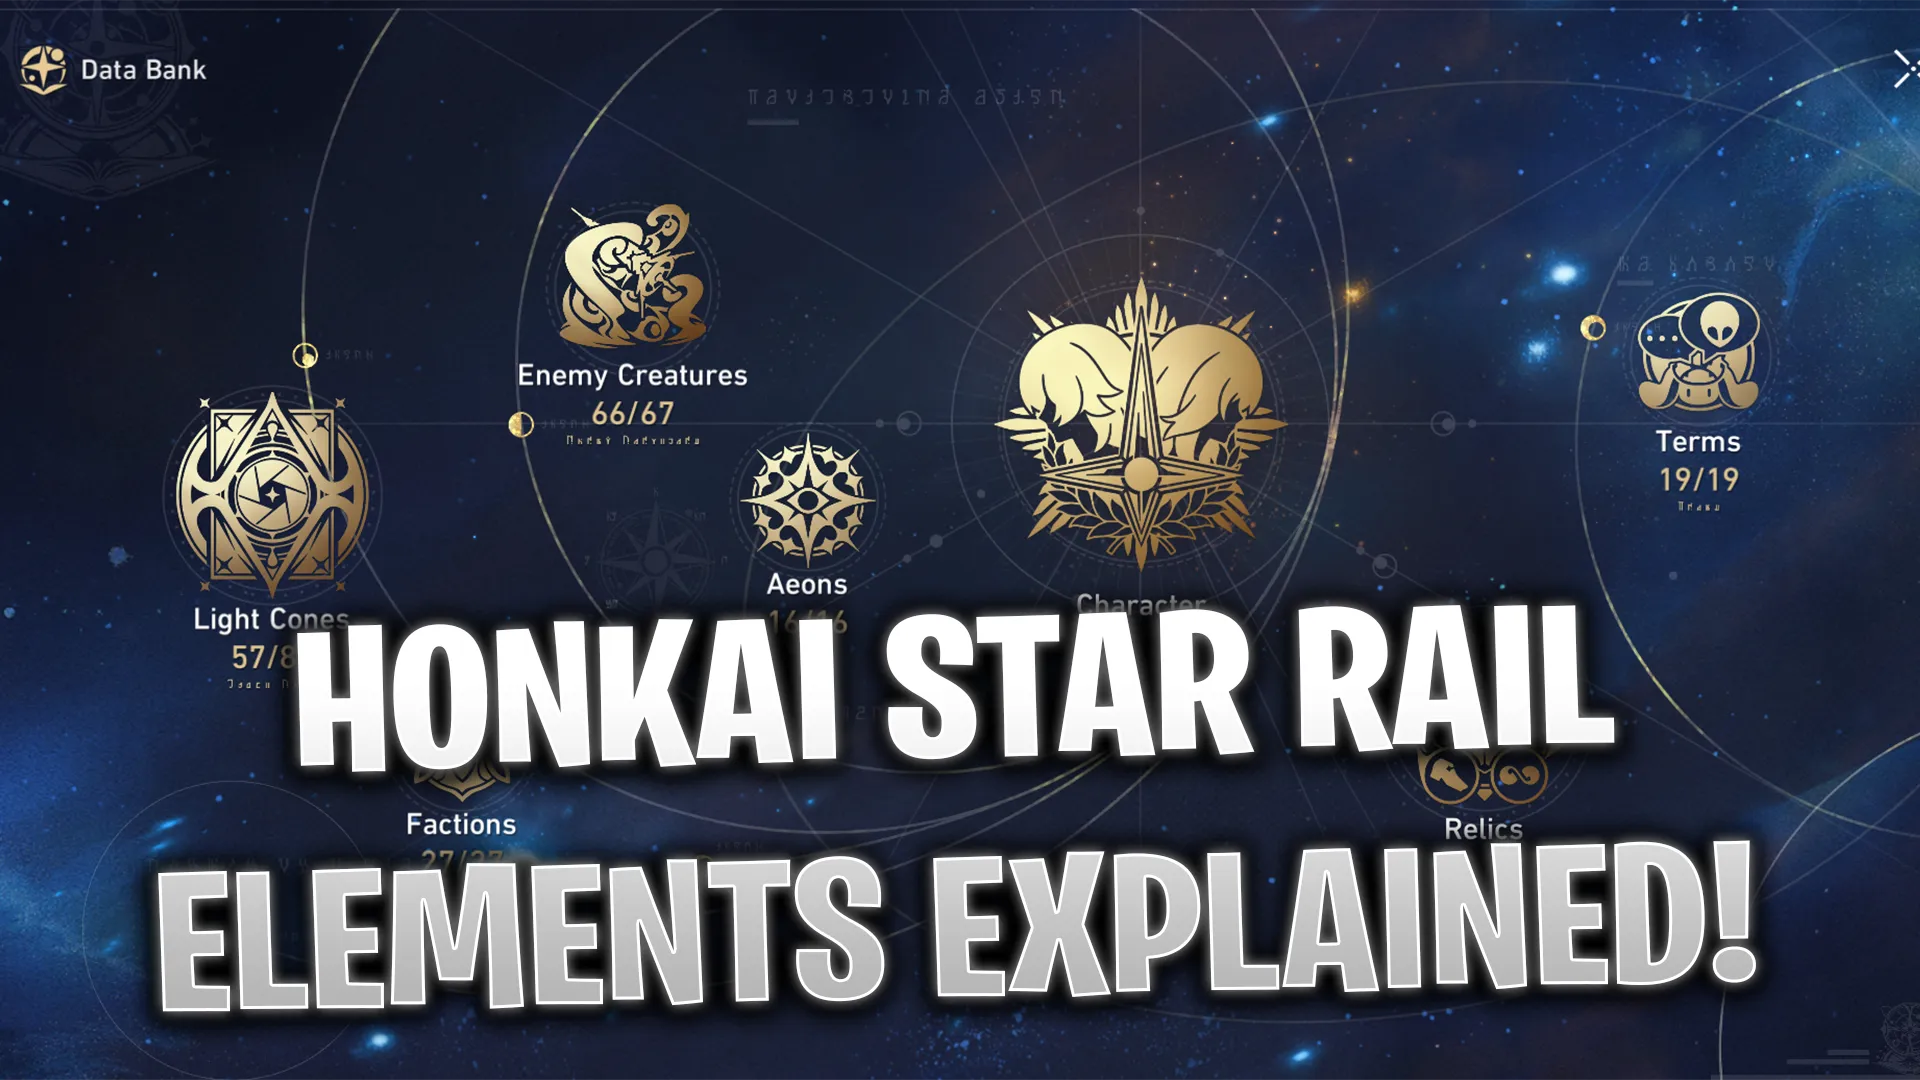 Honkai Star Rail Guide - Character Details, Light Cones, Relics, etc